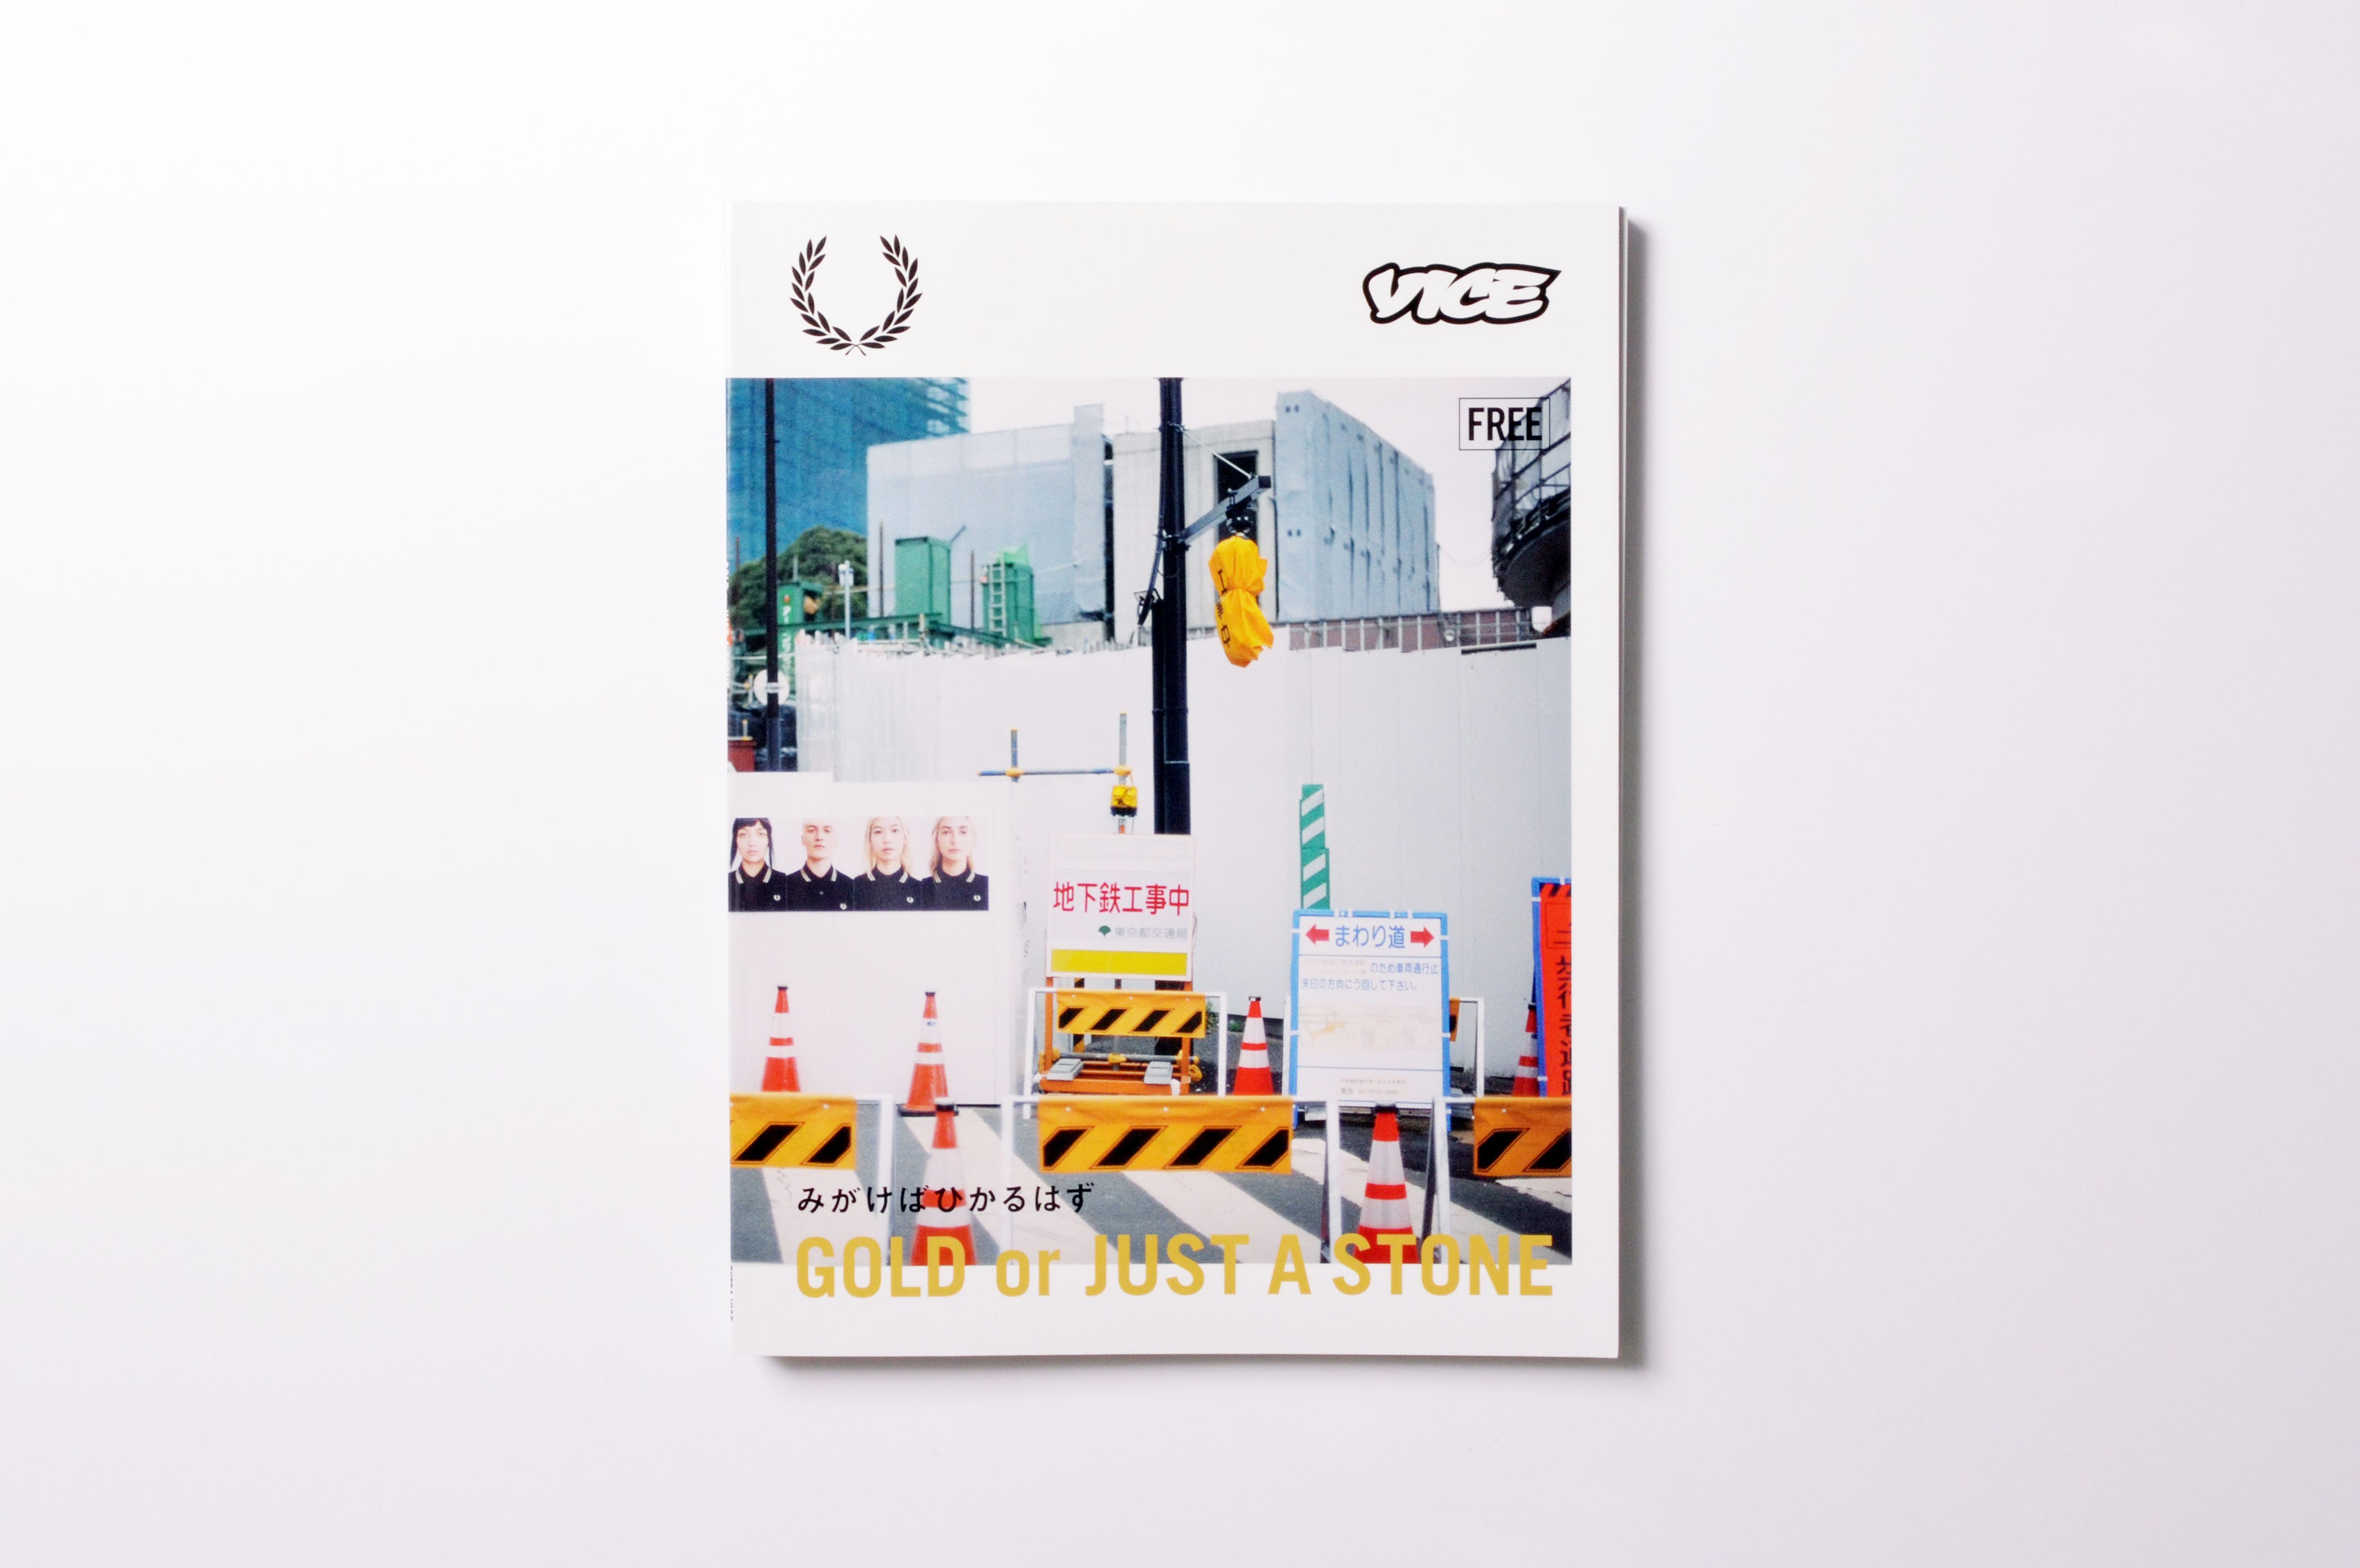 Vice Magazine Vice